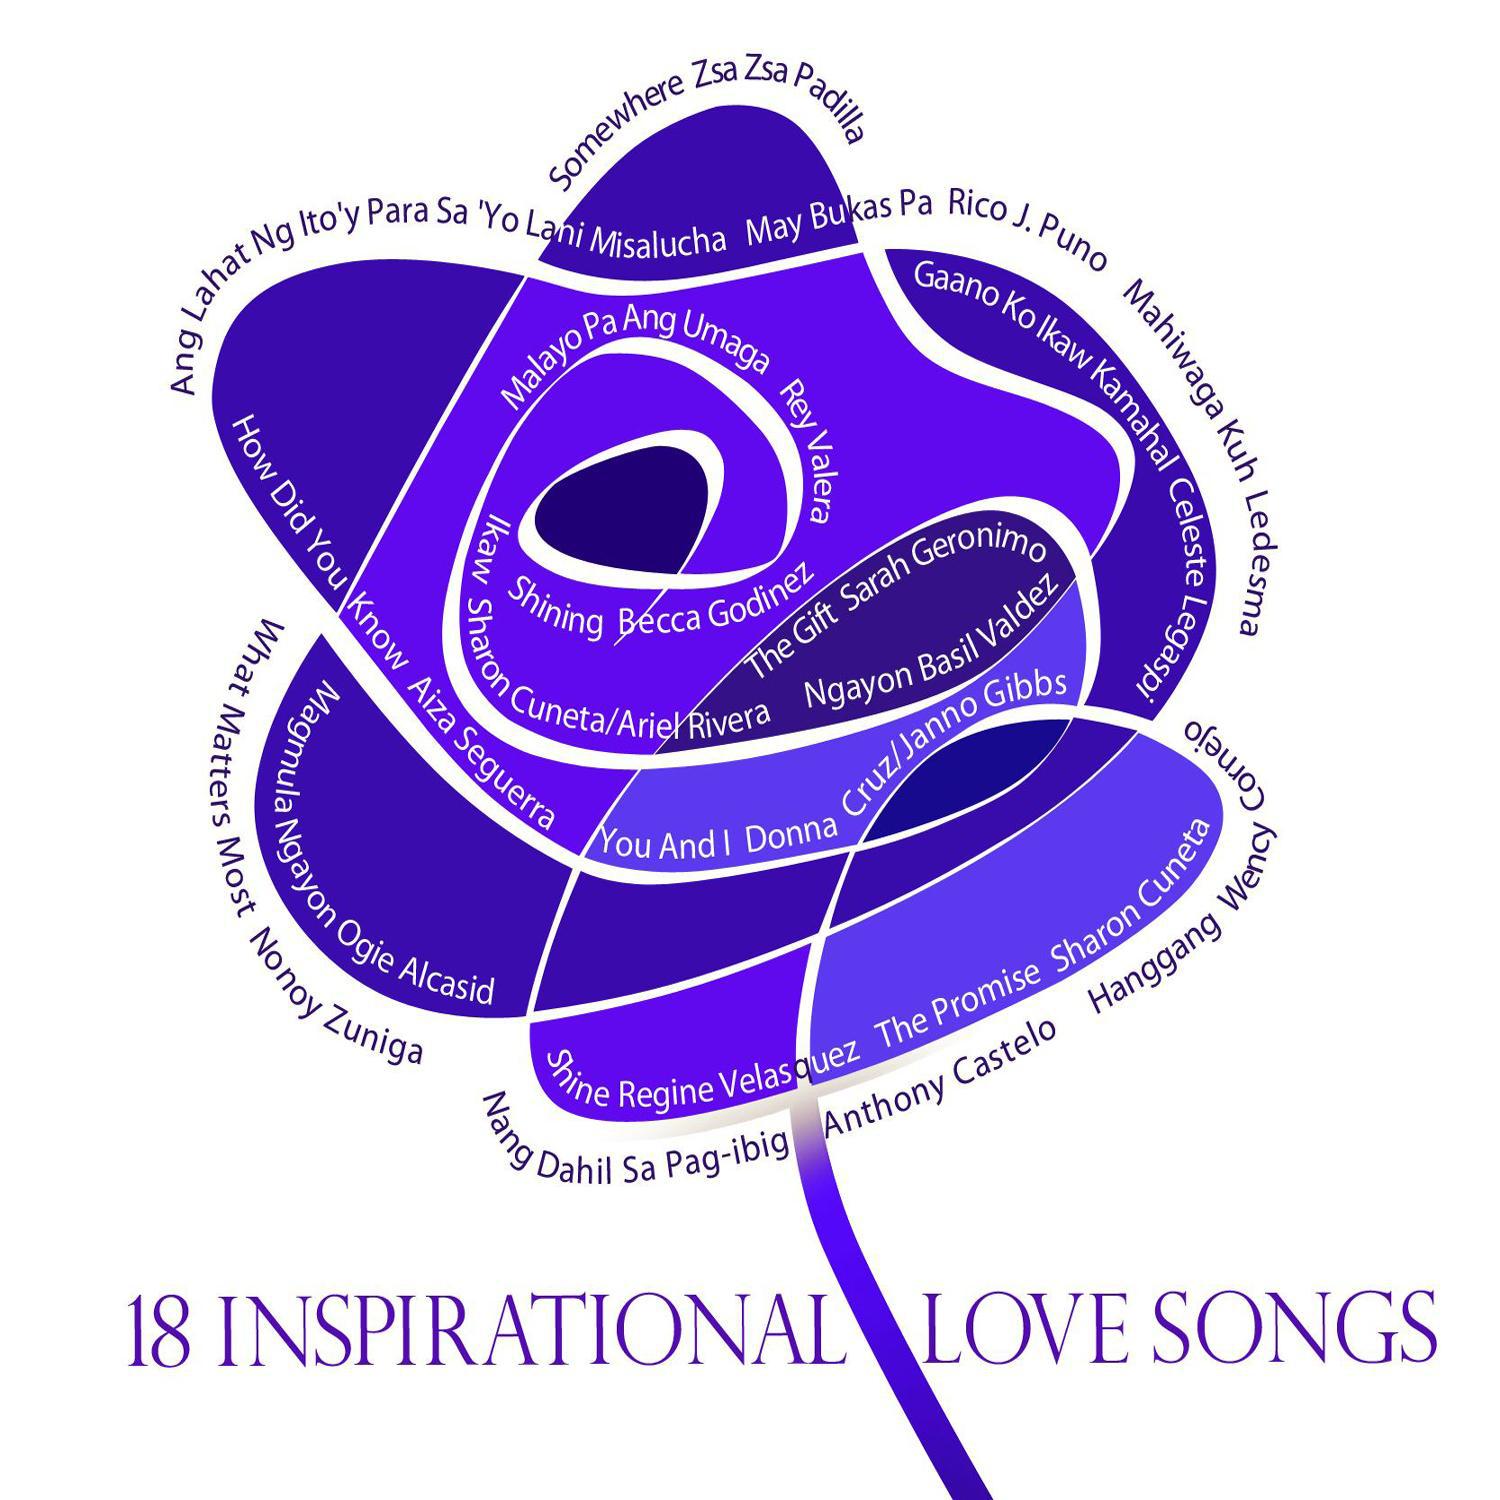 18 Inspirational Love Songs